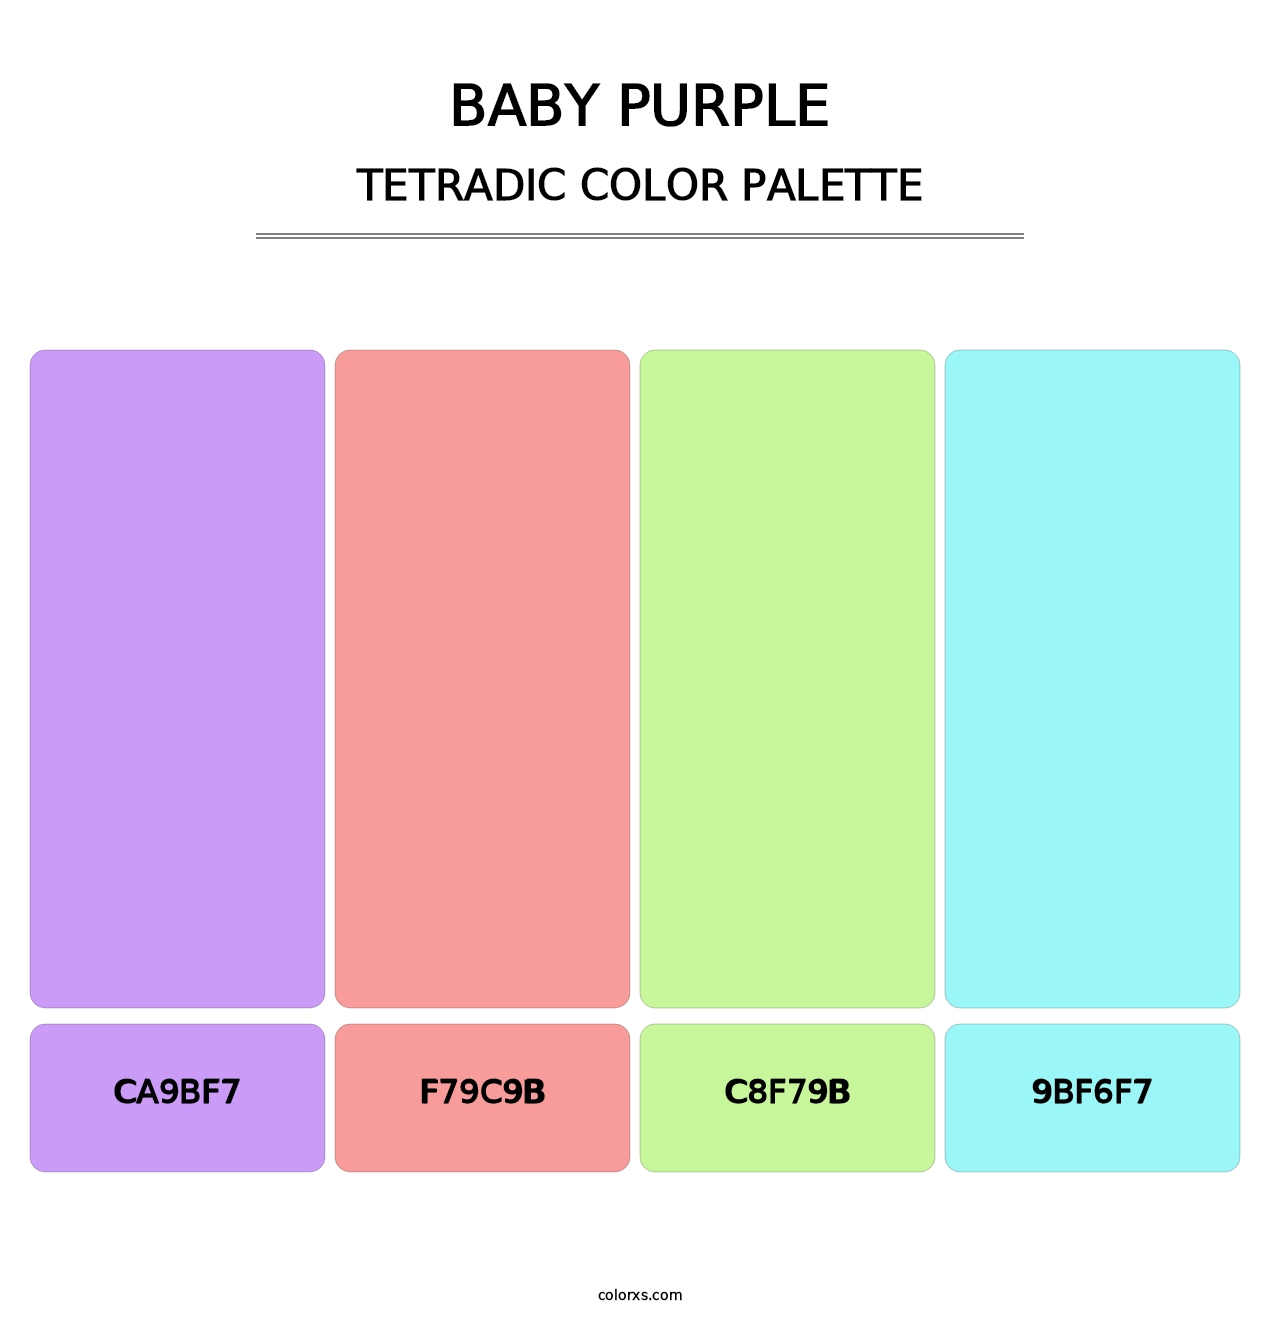 Baby Purple - Tetradic Color Palette